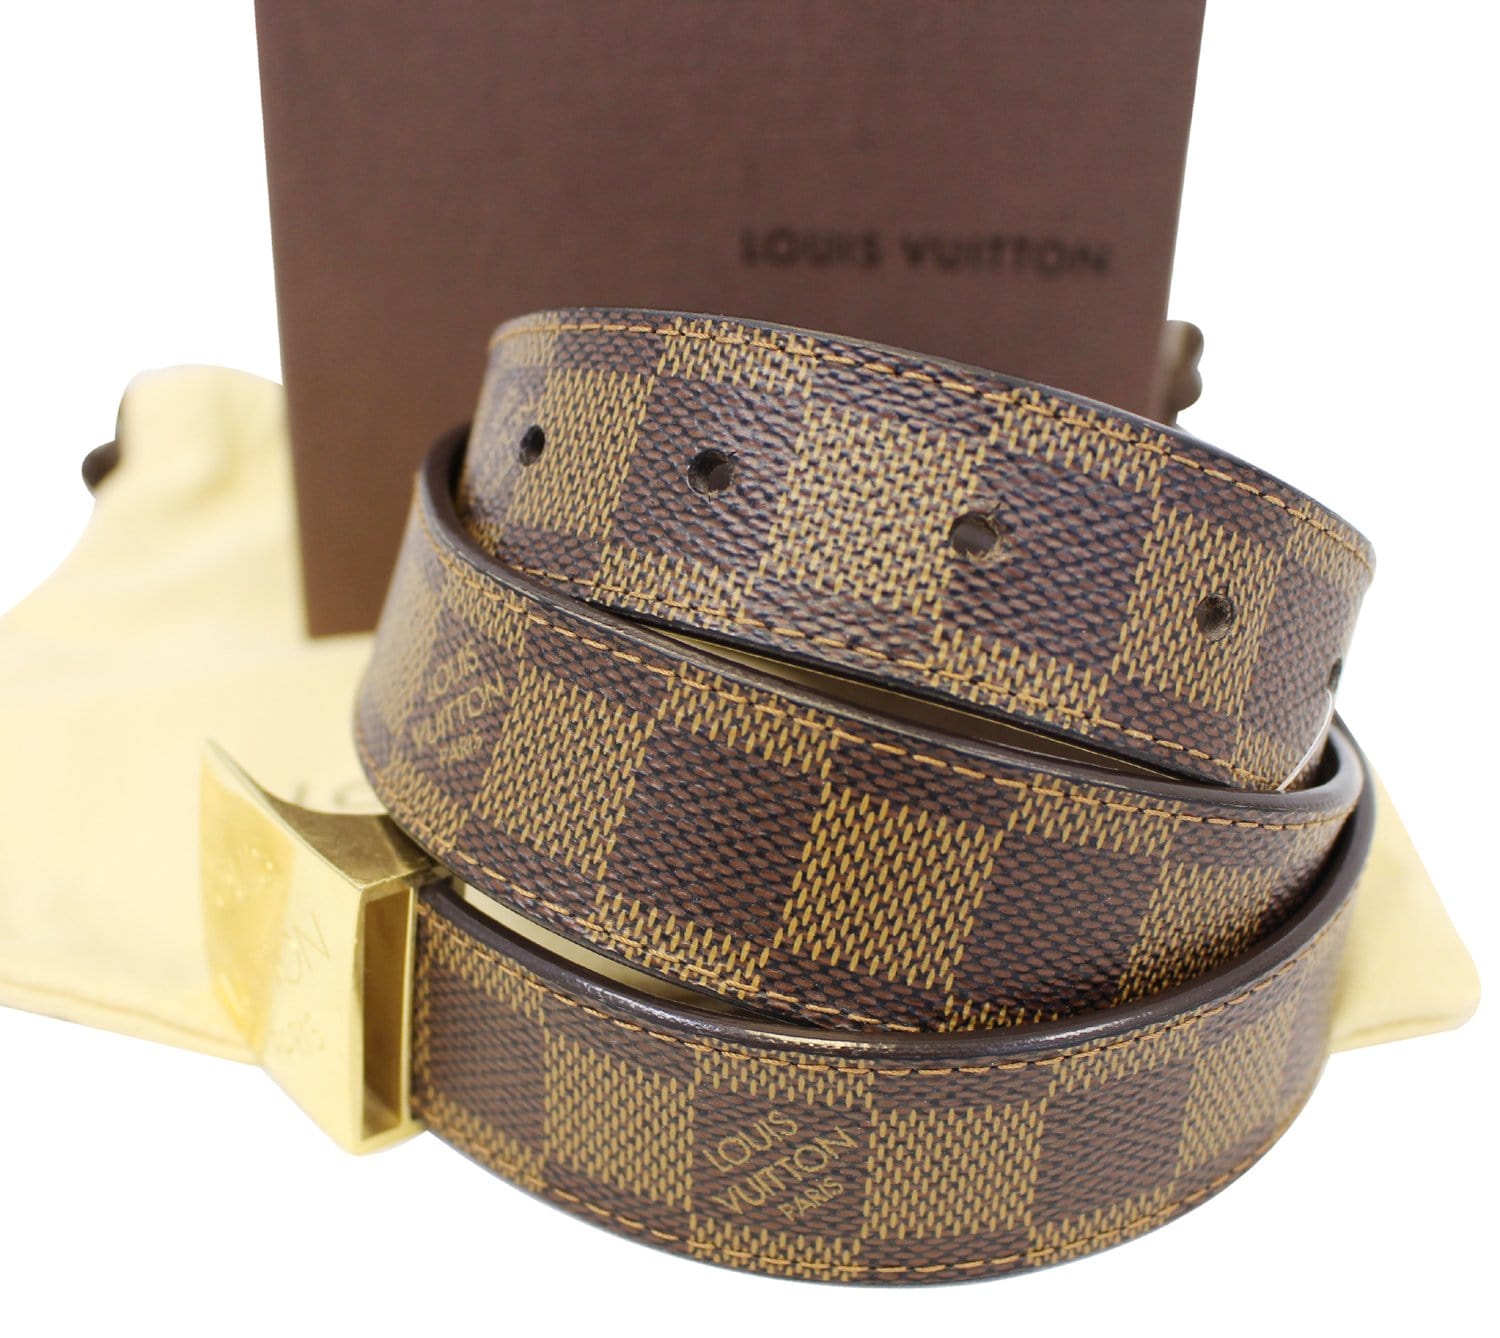 Louis Vuitton Belt (Damier)